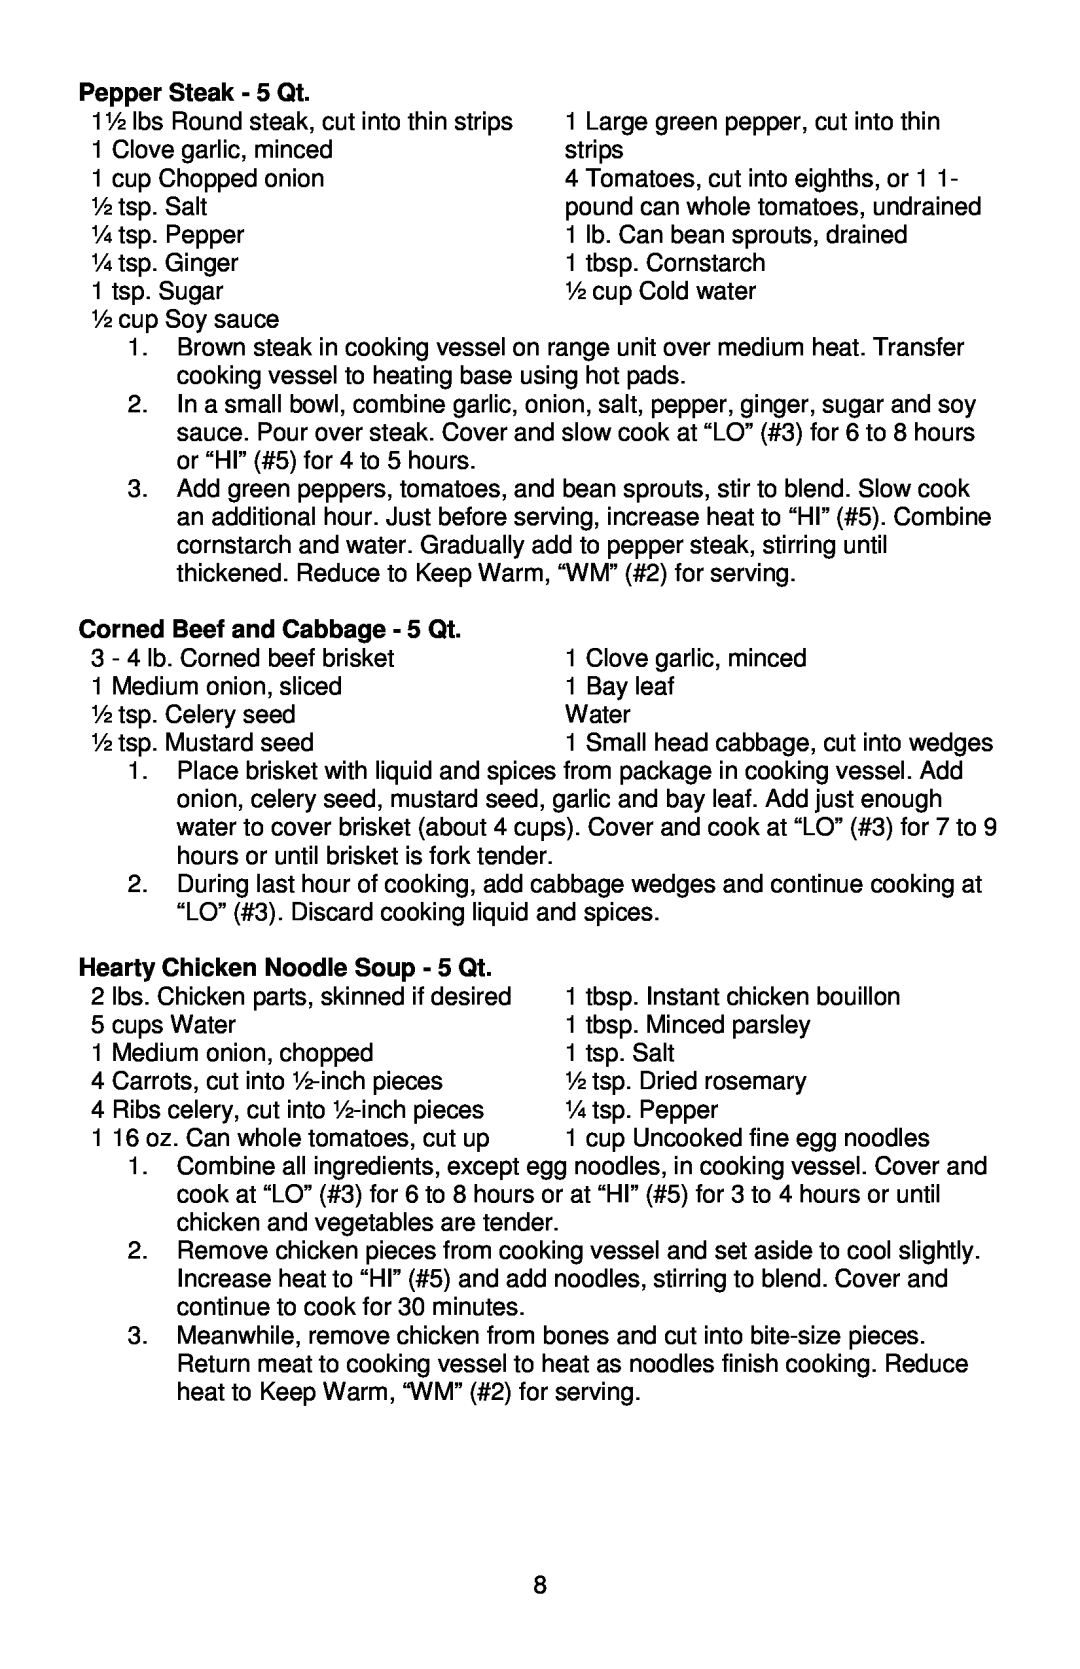 West Bend 84915 instruction manual Pepper Steak - 5 Qt, Corned Beef and Cabbage - 5 Qt, Hearty Chicken Noodle Soup - 5 Qt 